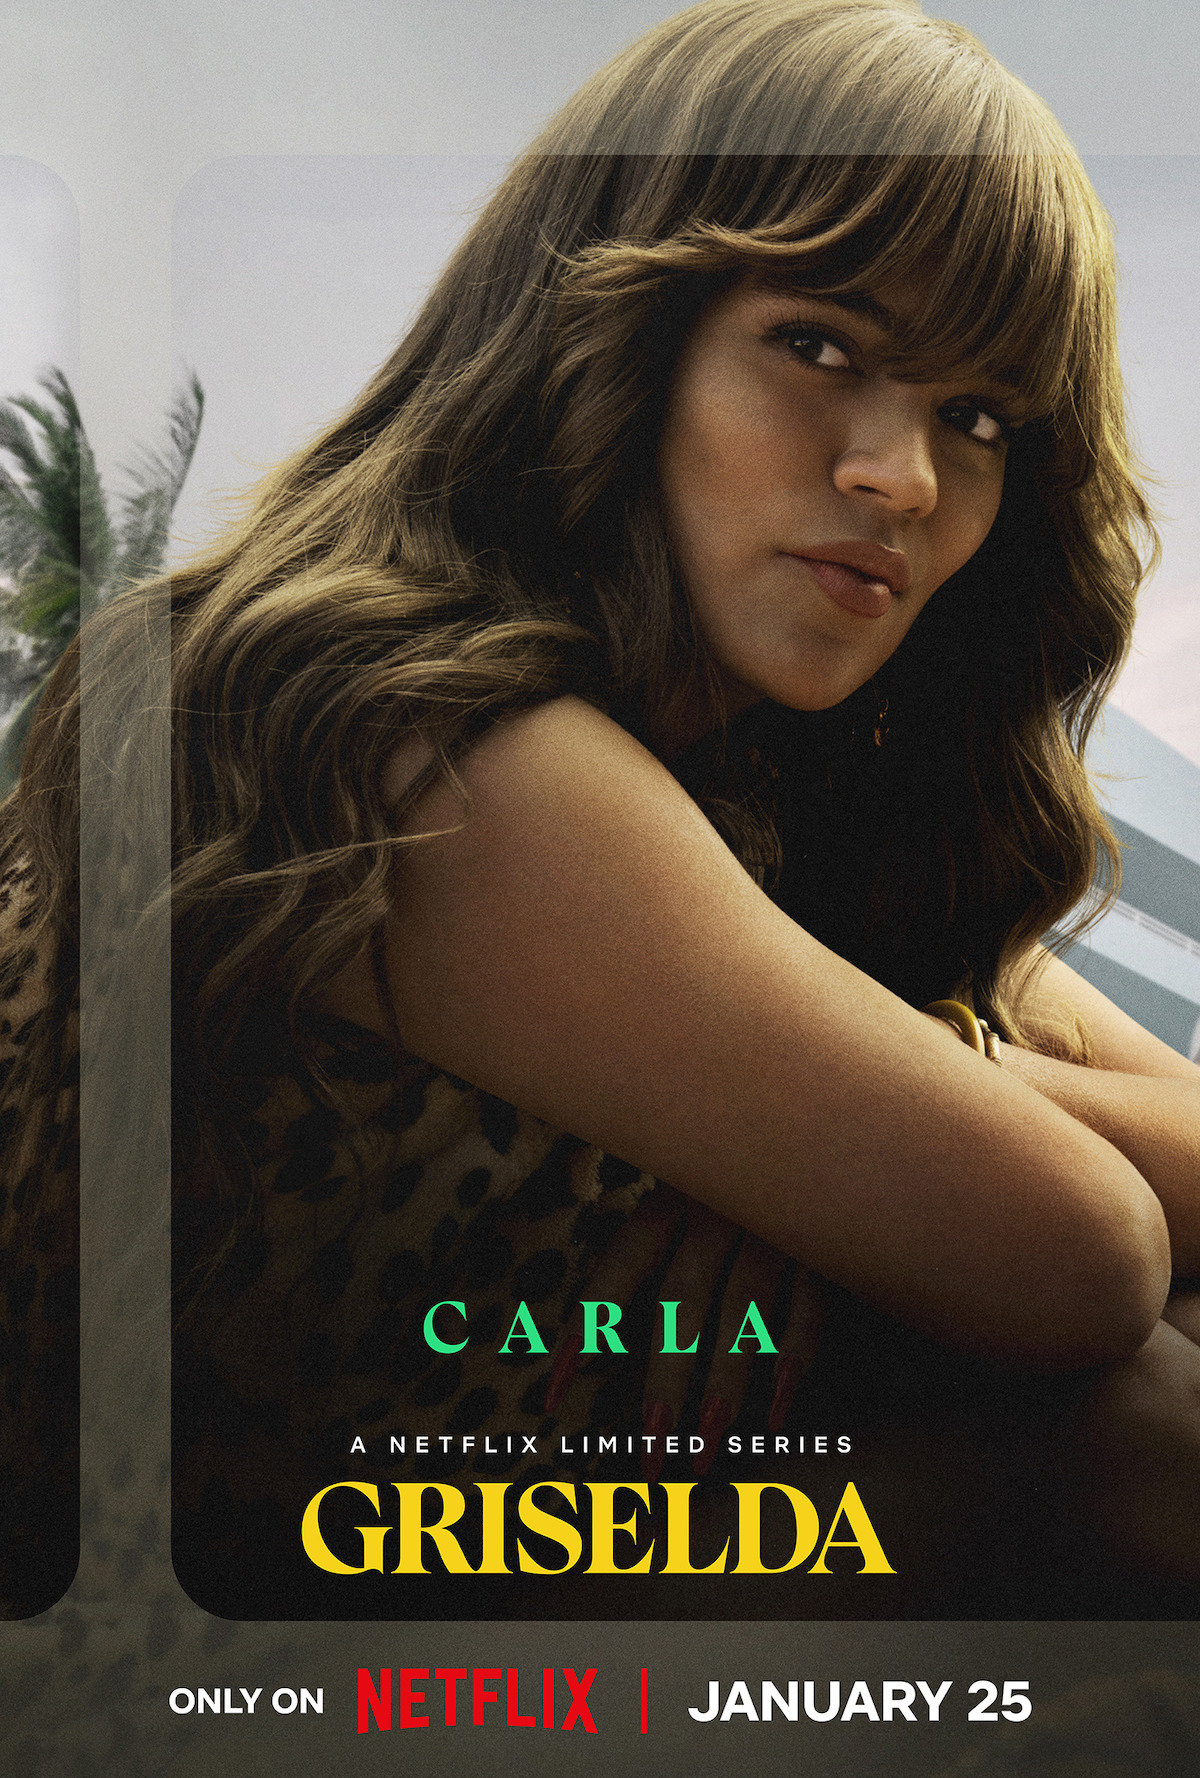 Who Does Karol G Play in 'Griselda', Sofia Vergara's Netflix Show?